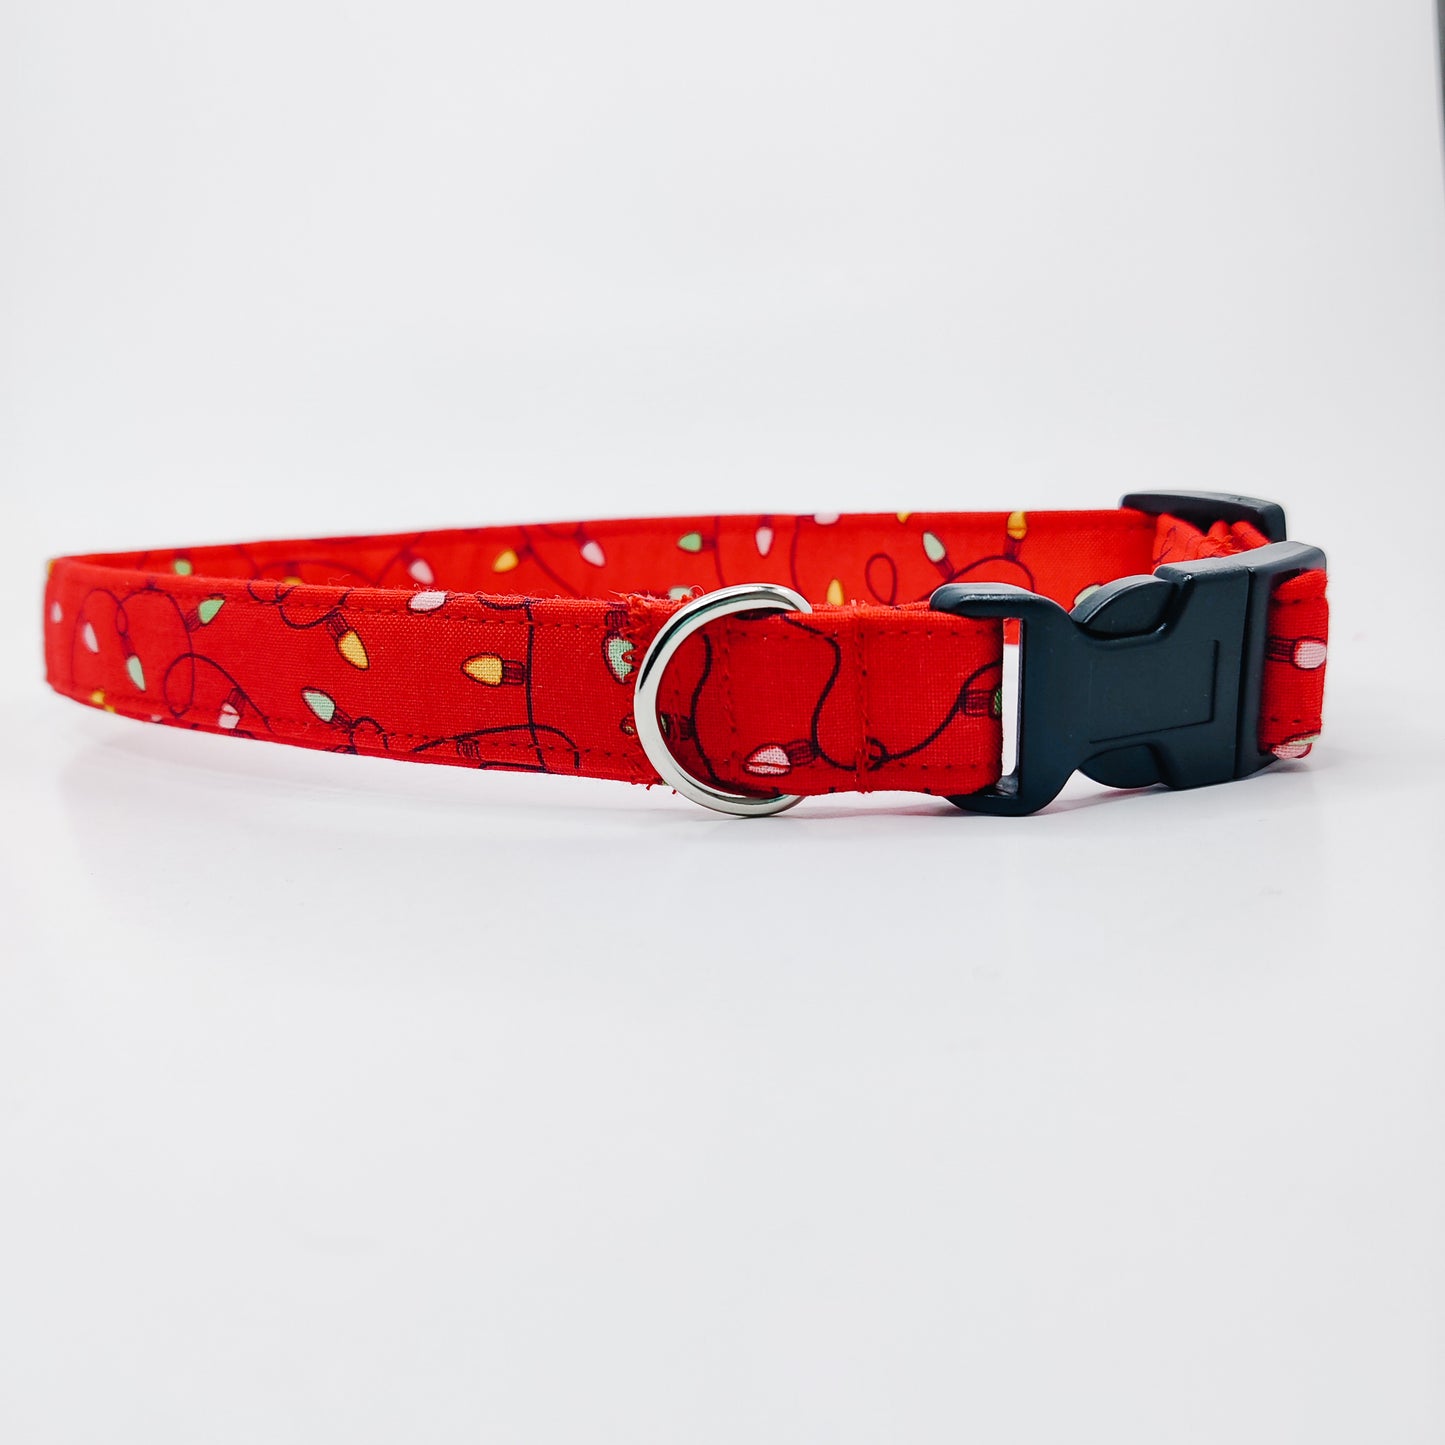 String Lights on Red Dog Collar/ Cat Collar